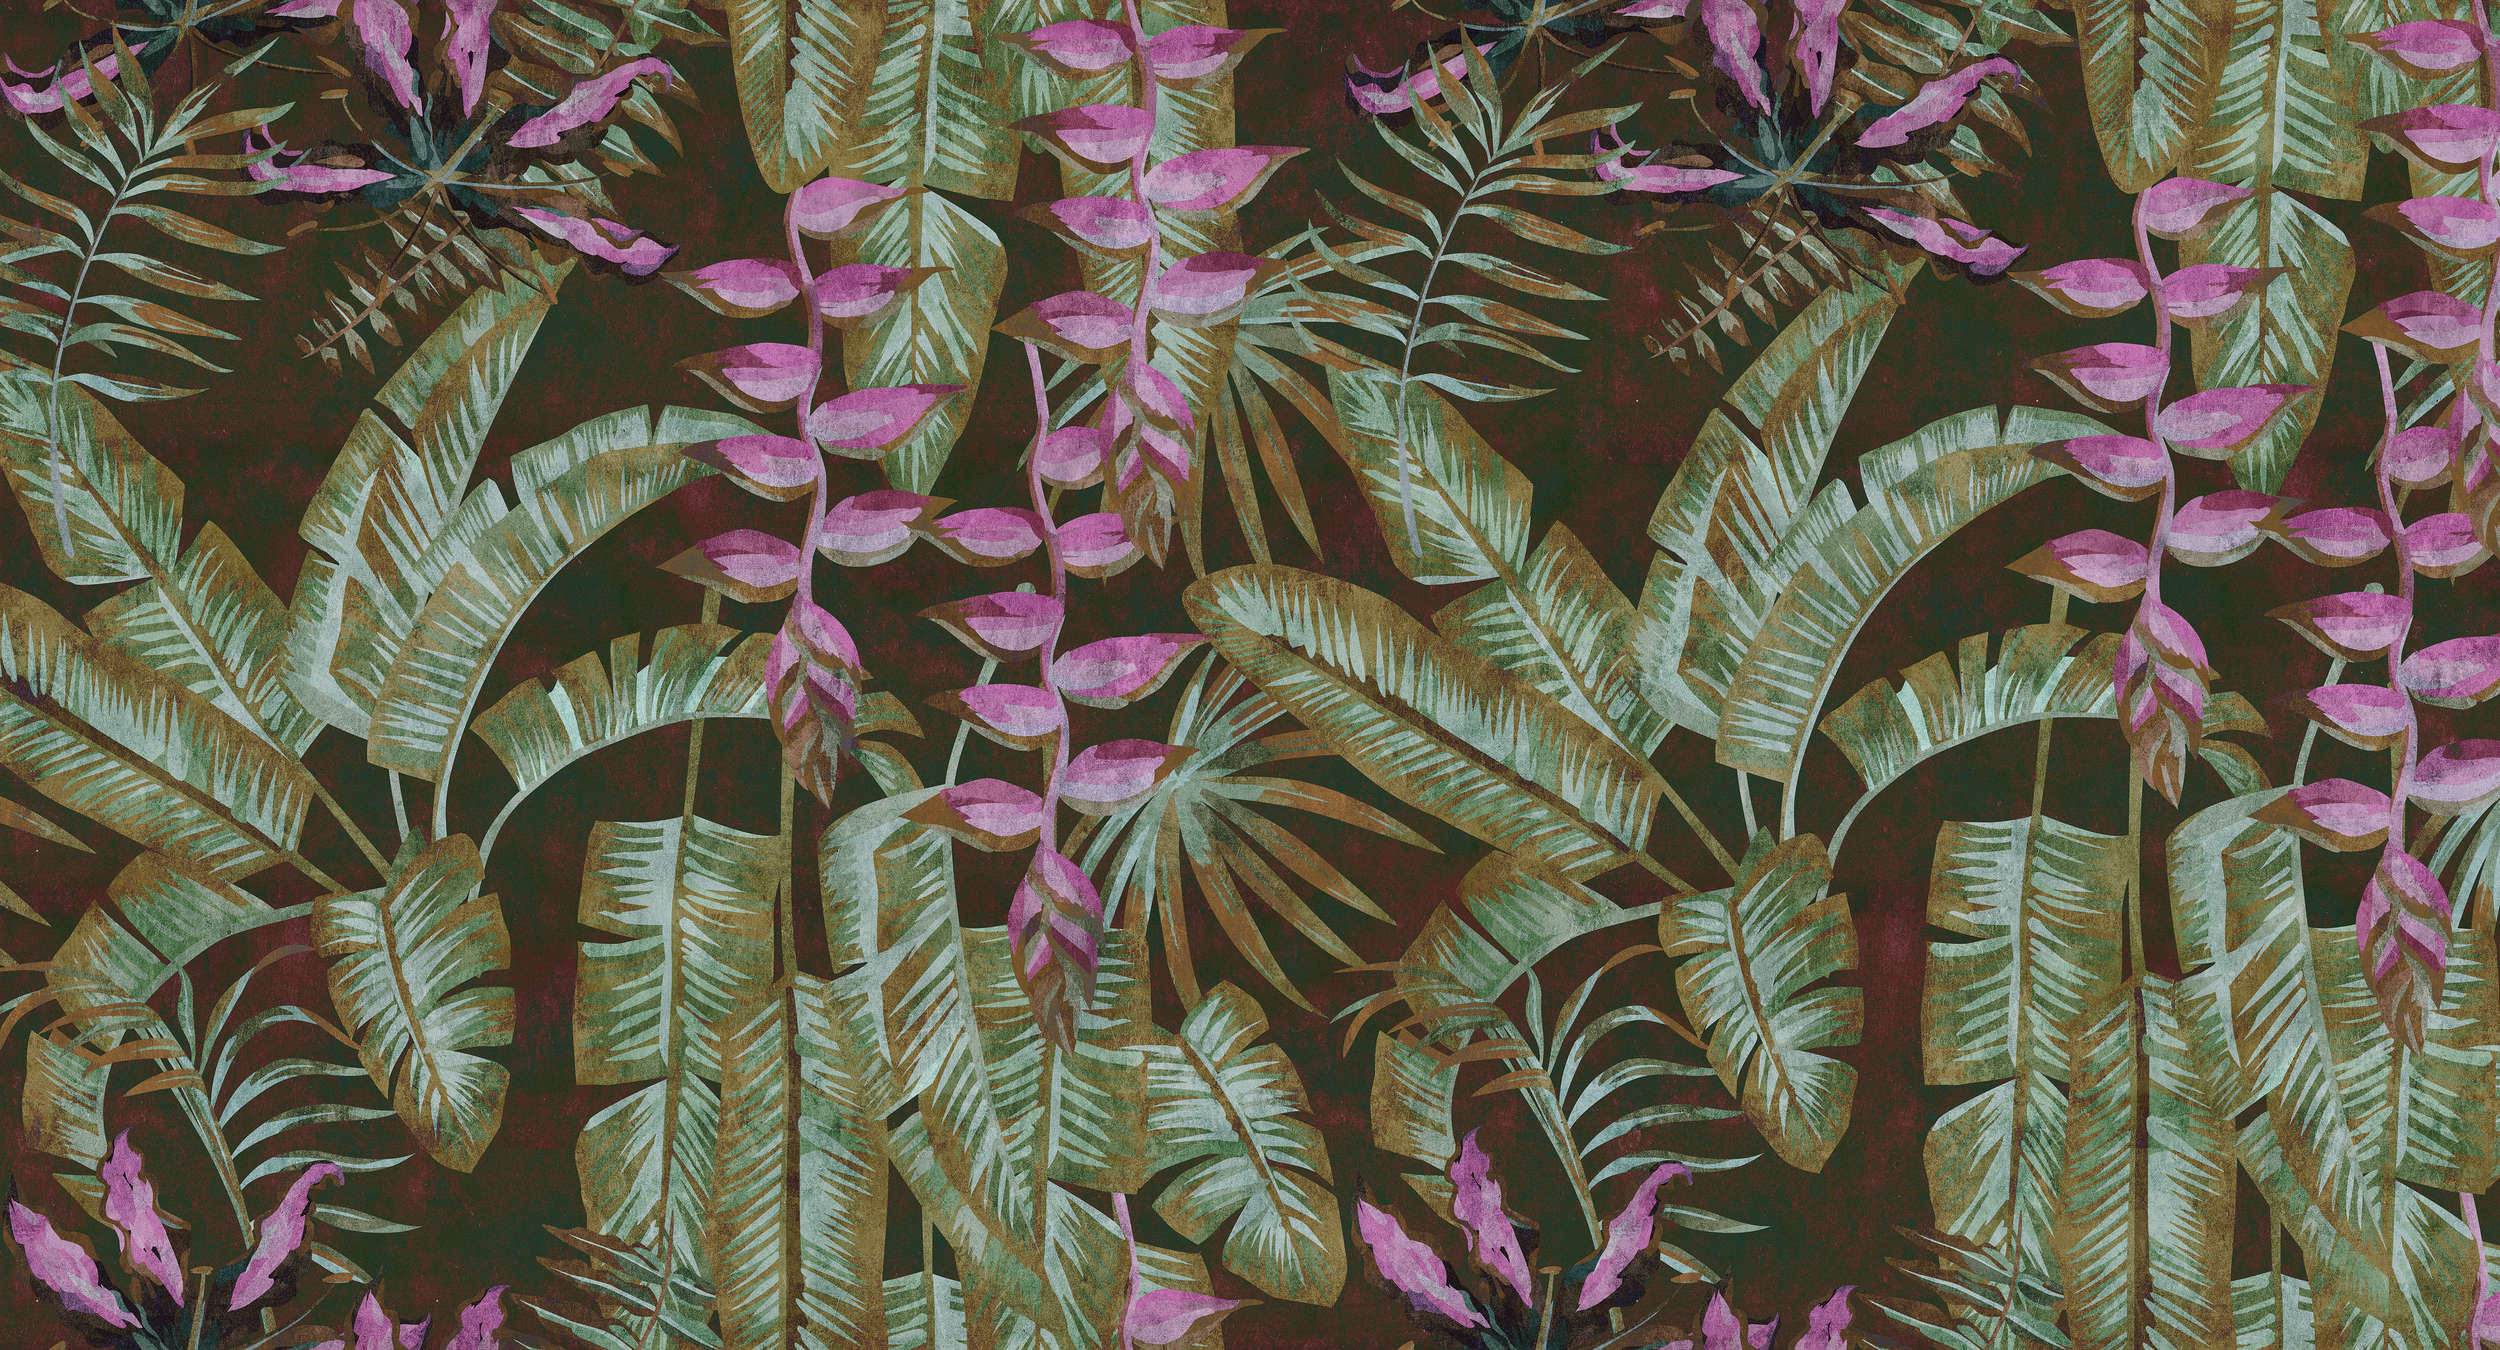             Tropicana 1 - Carta da parati Jungle con texture di carta assorbente Banana Leaves&Farms - Verde, Viola | Texture Materiali non tessuto
        